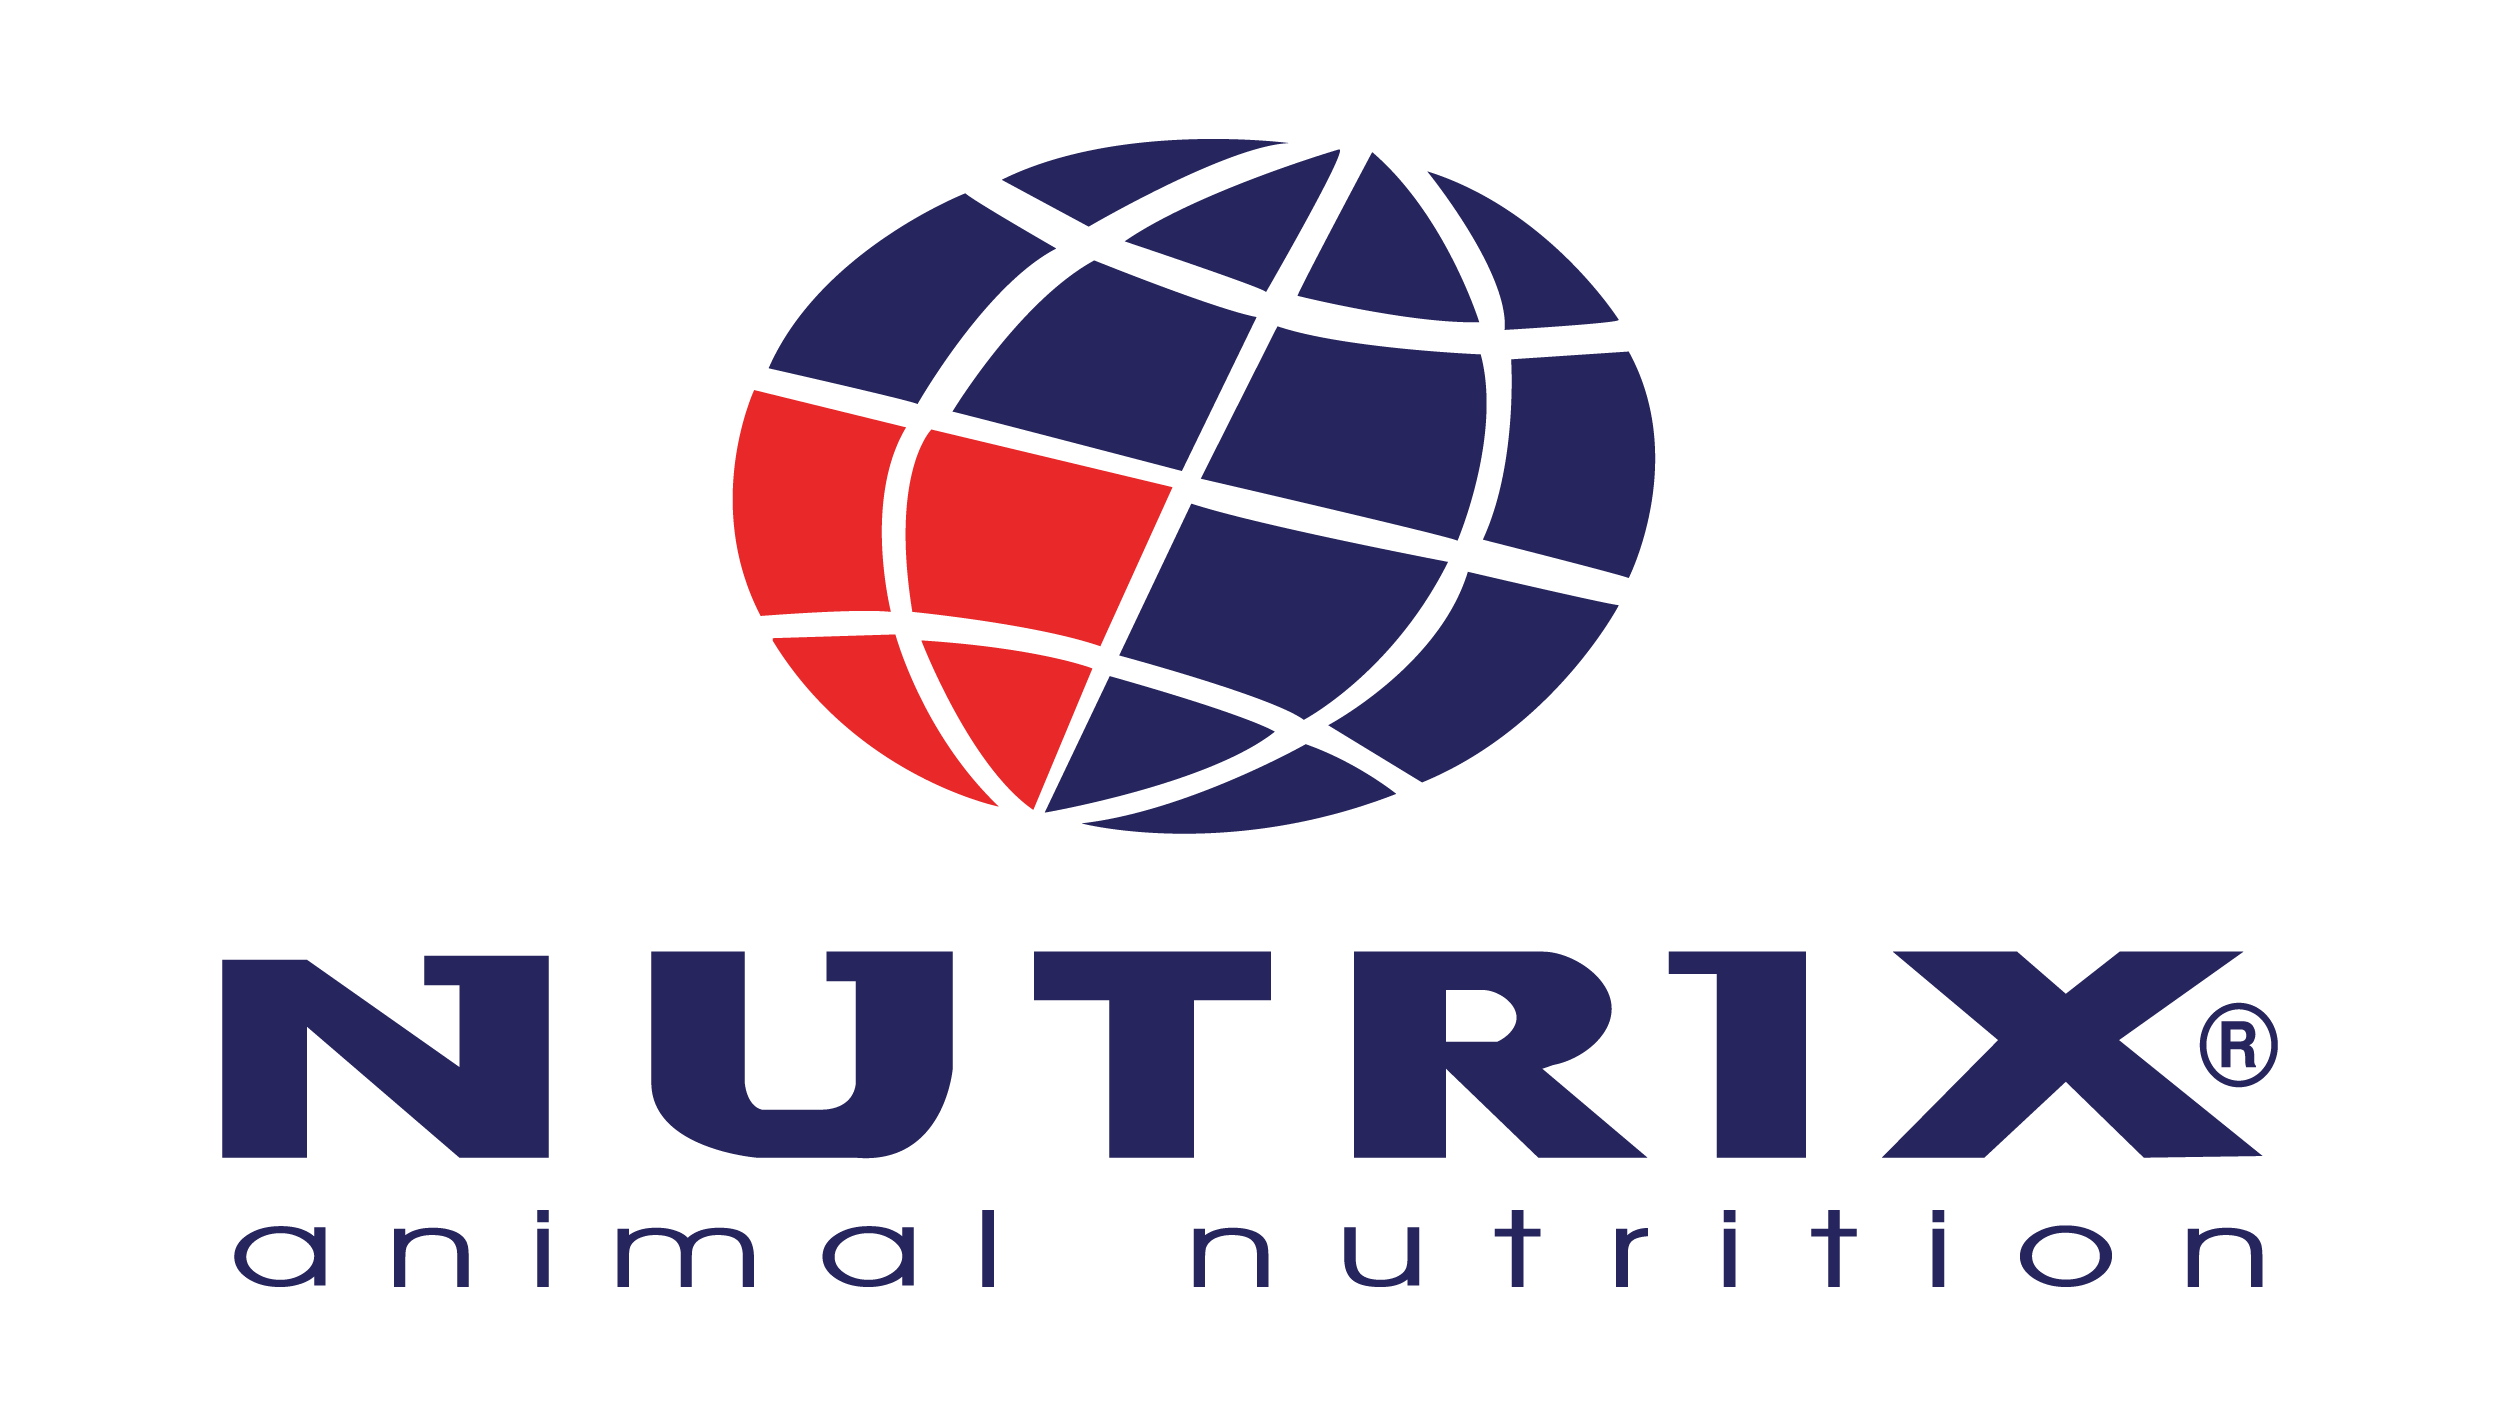 Nutrix